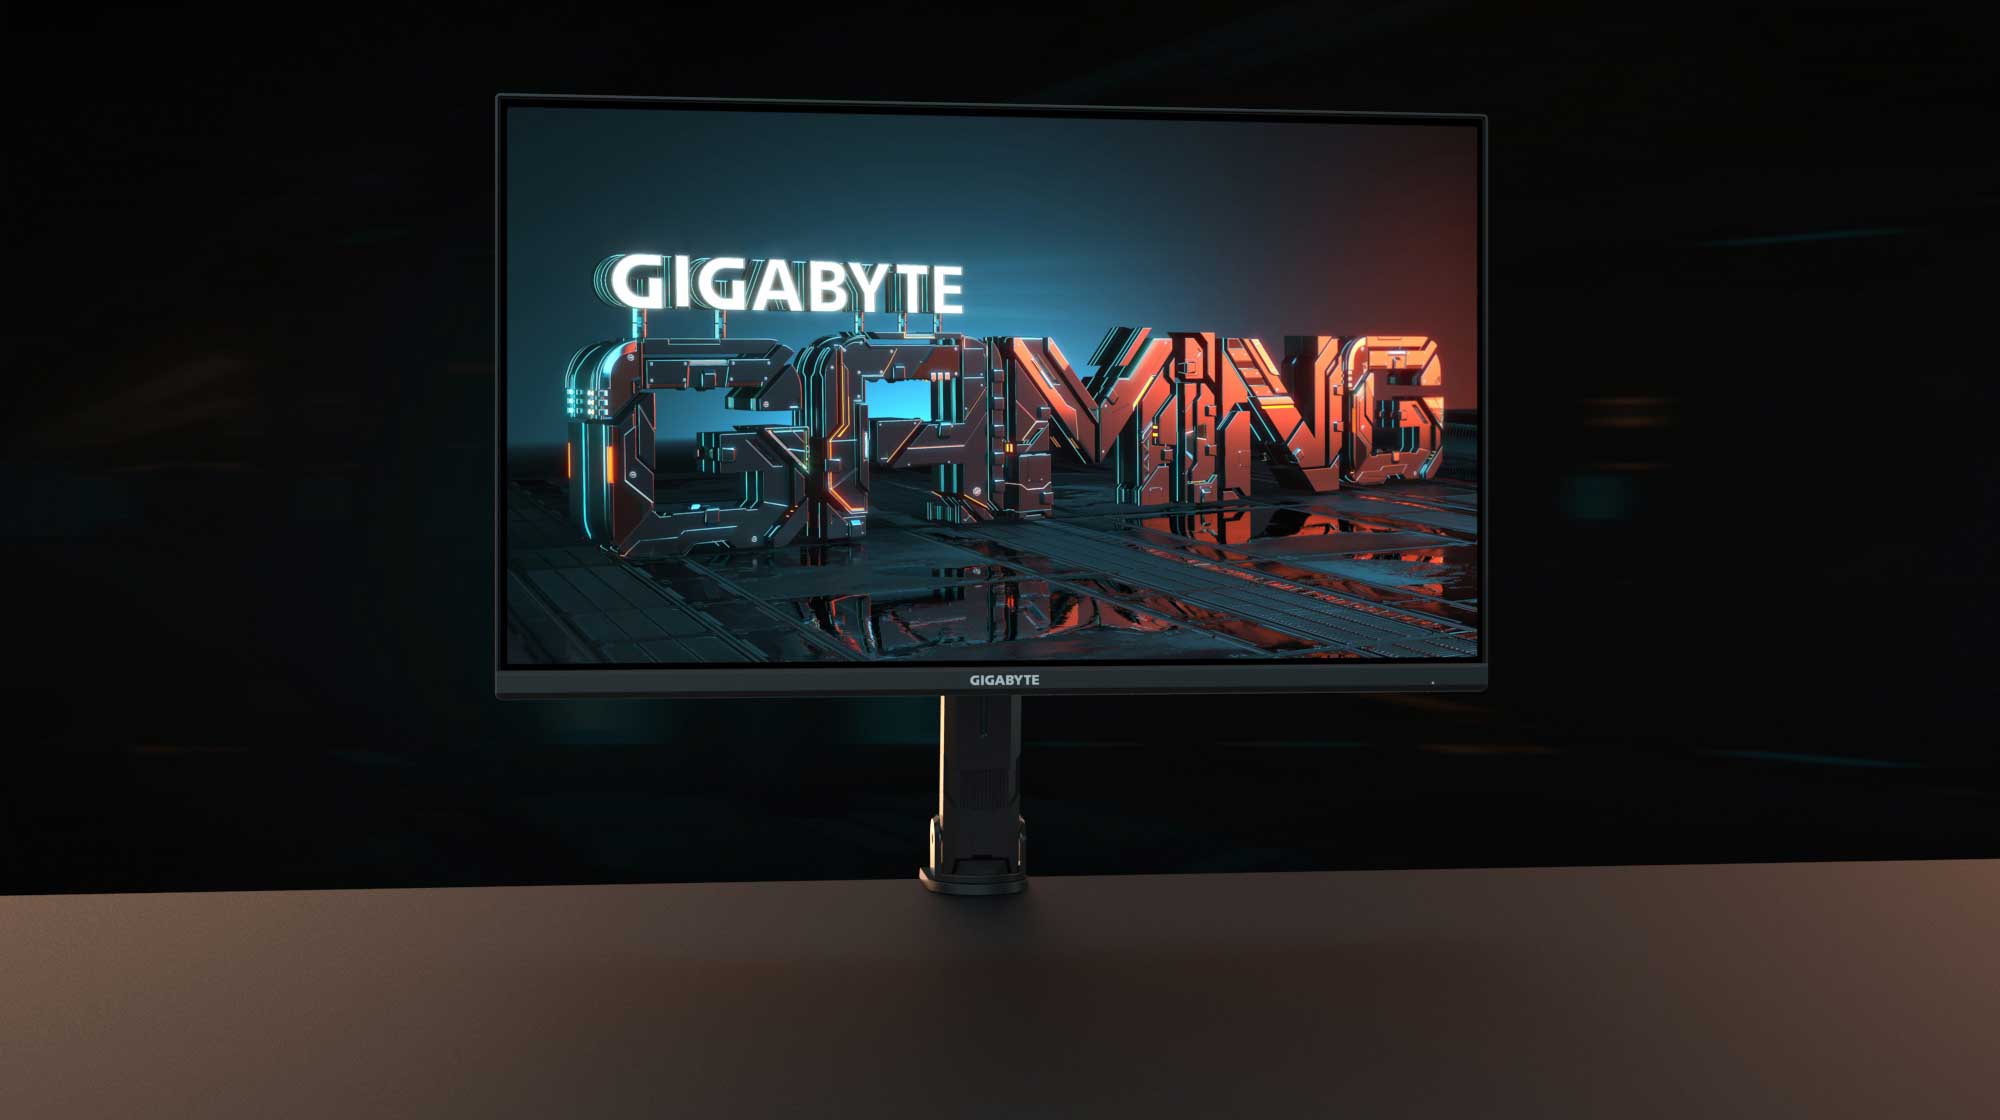 AORUS - The new GIGABYTE M32U 4K gaming monitor is great